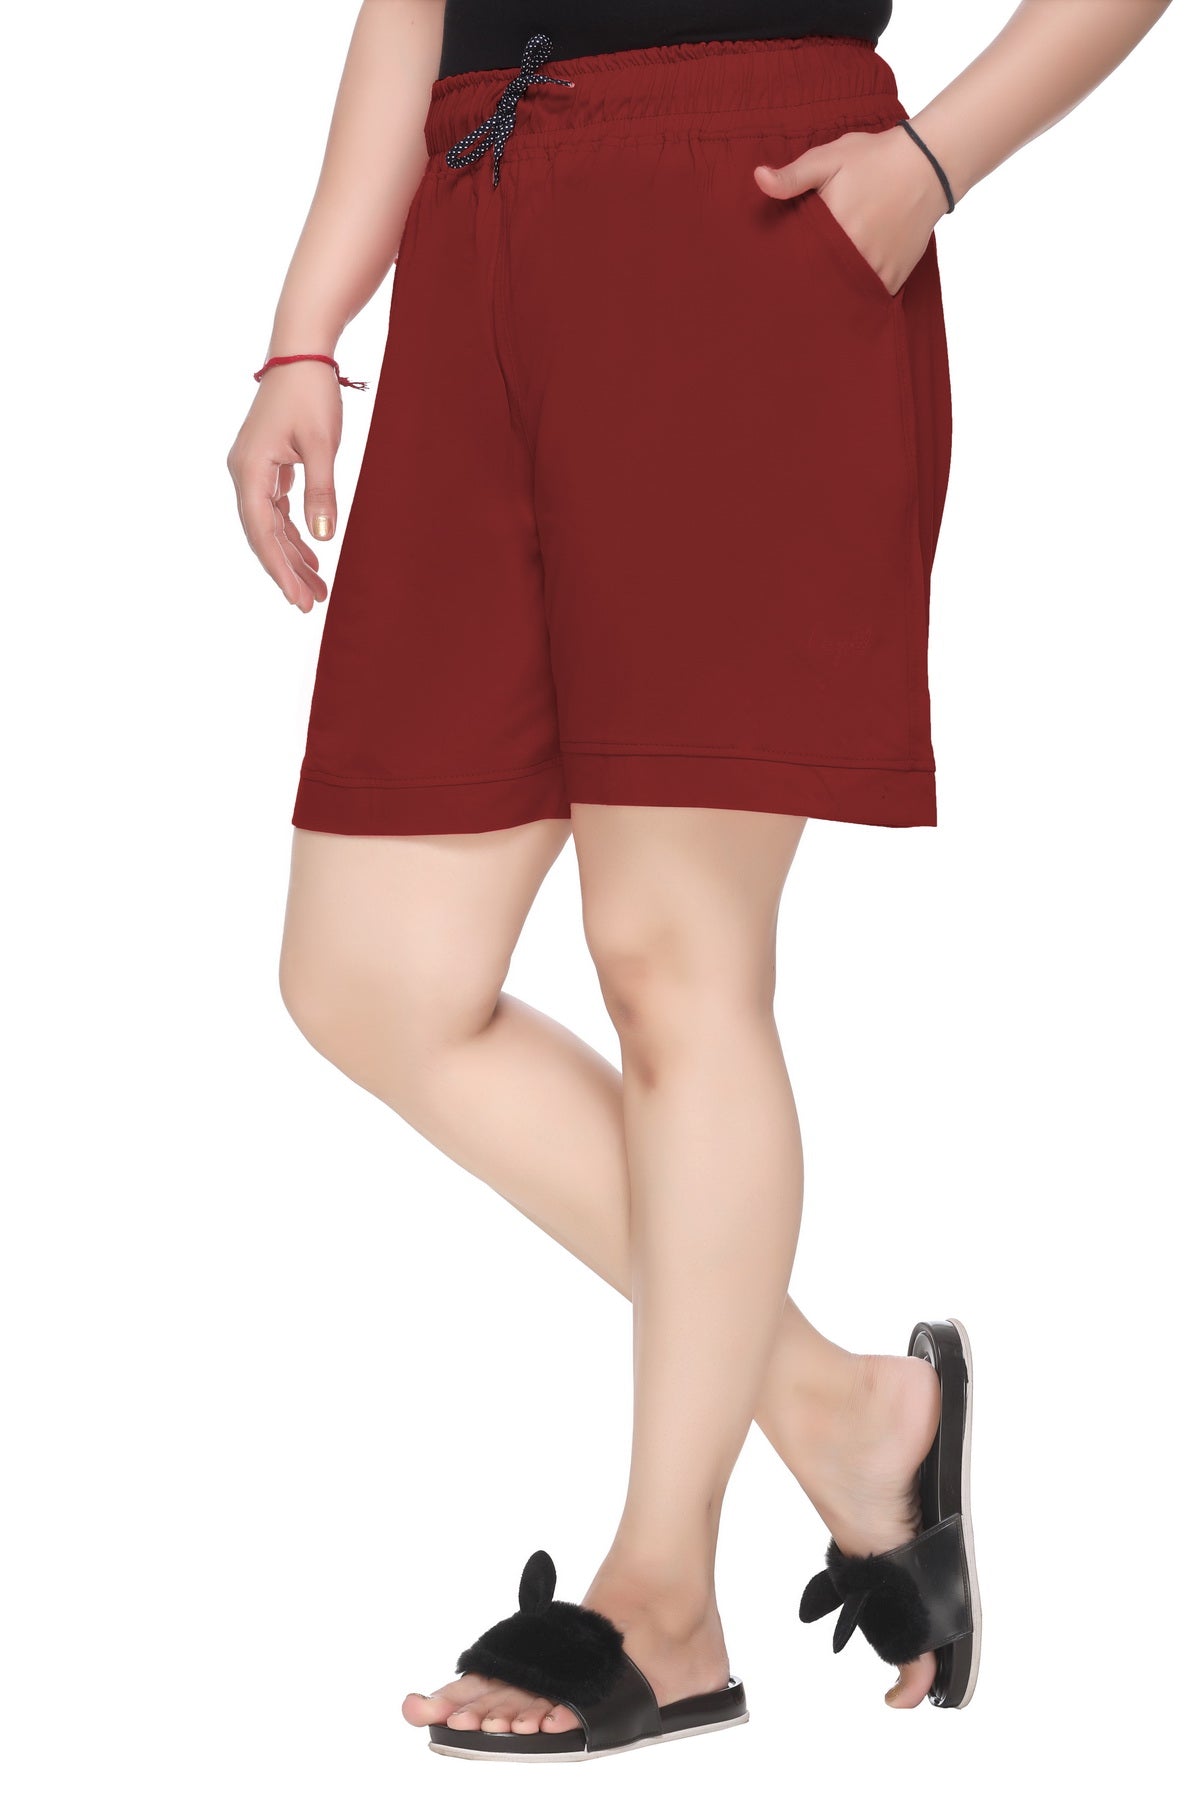 Stylish Maroon Cotton Shorts For Women online in India (Plain Bermuda)